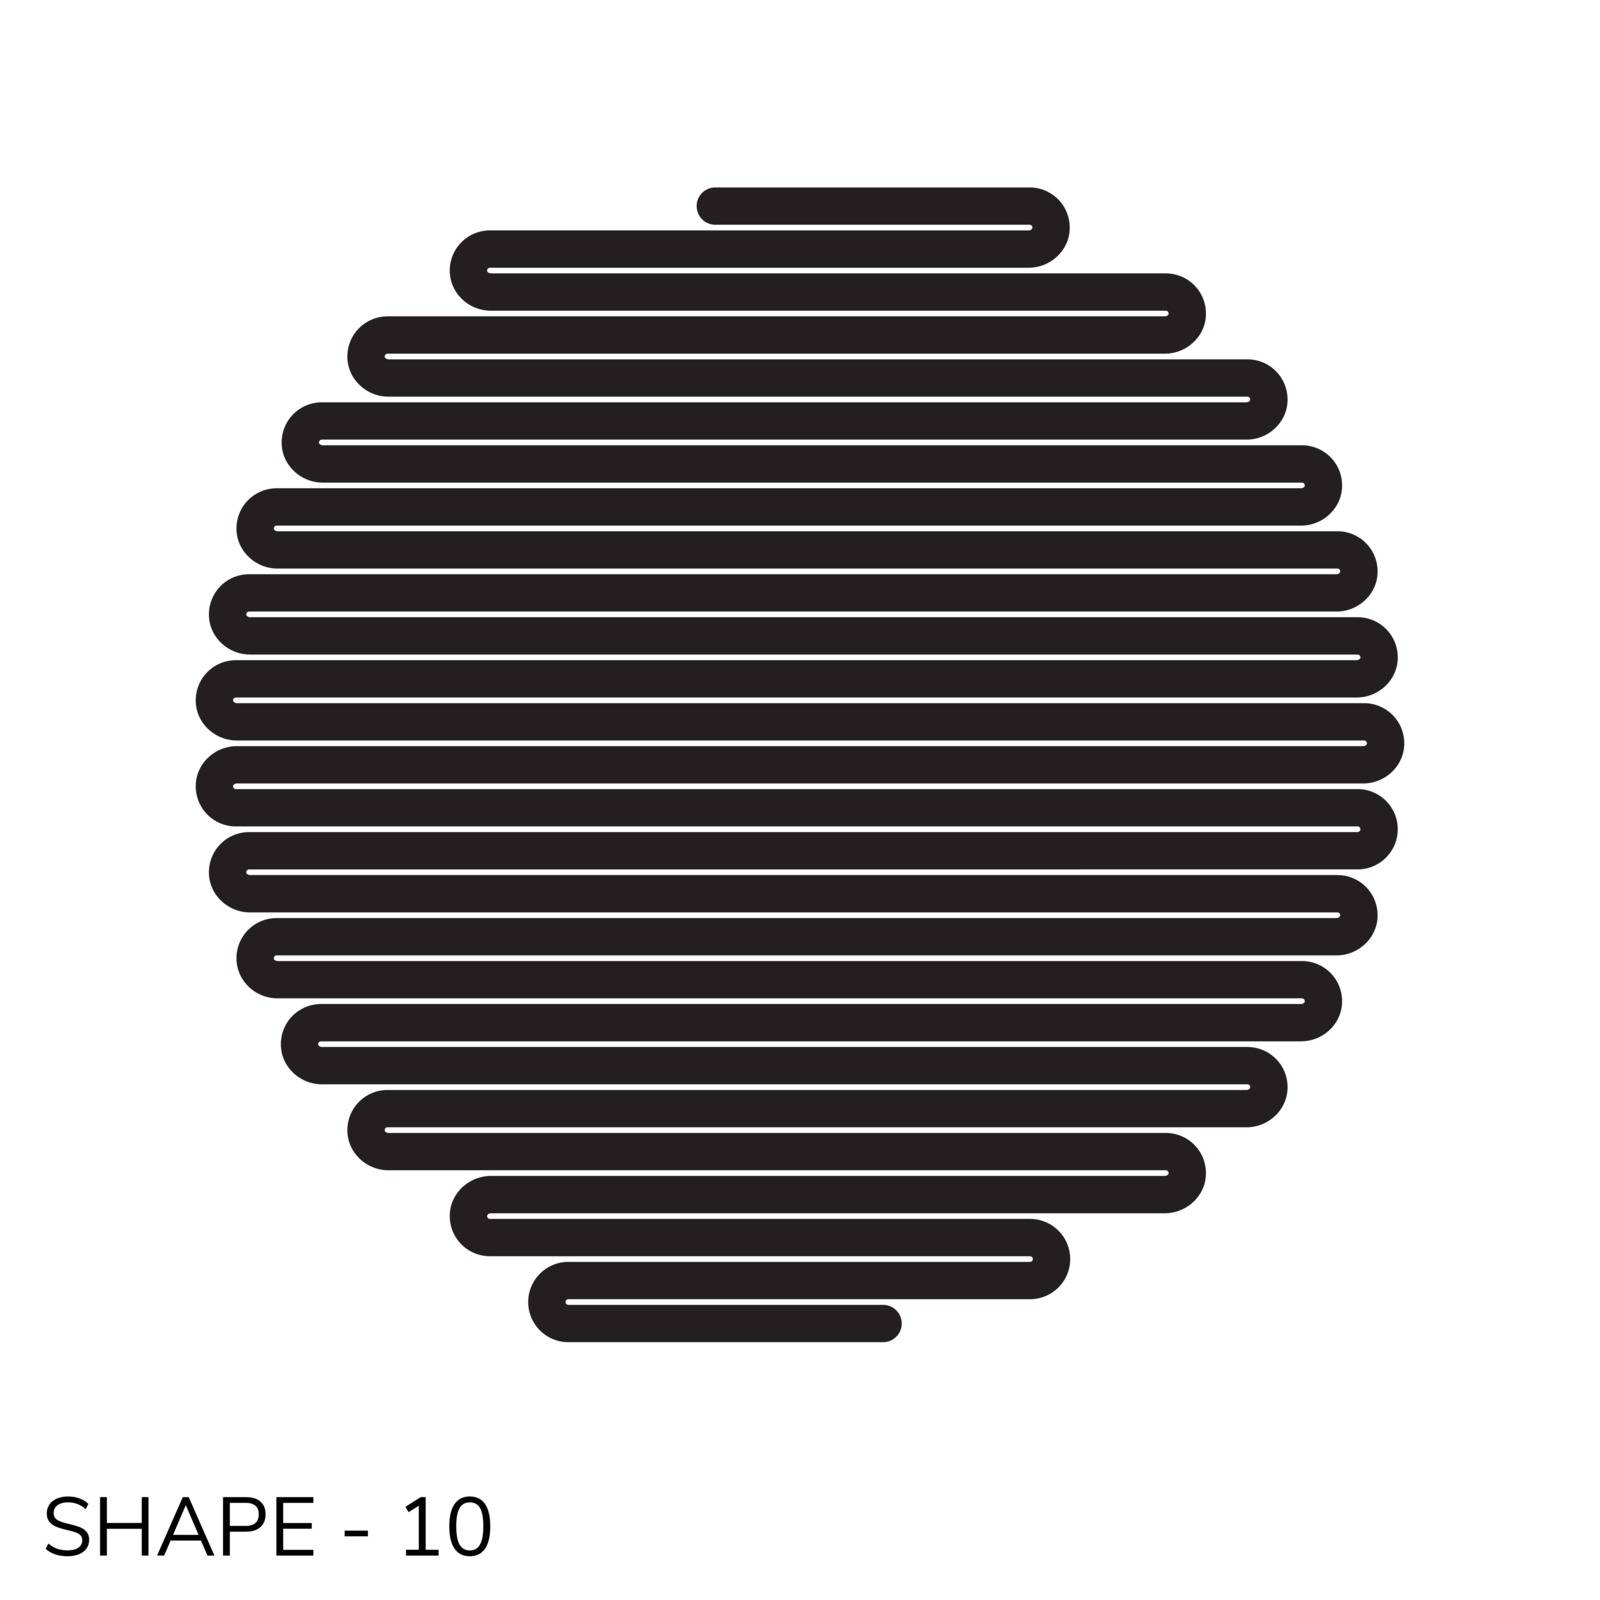 Simple Geometric Shape by Vanzyst